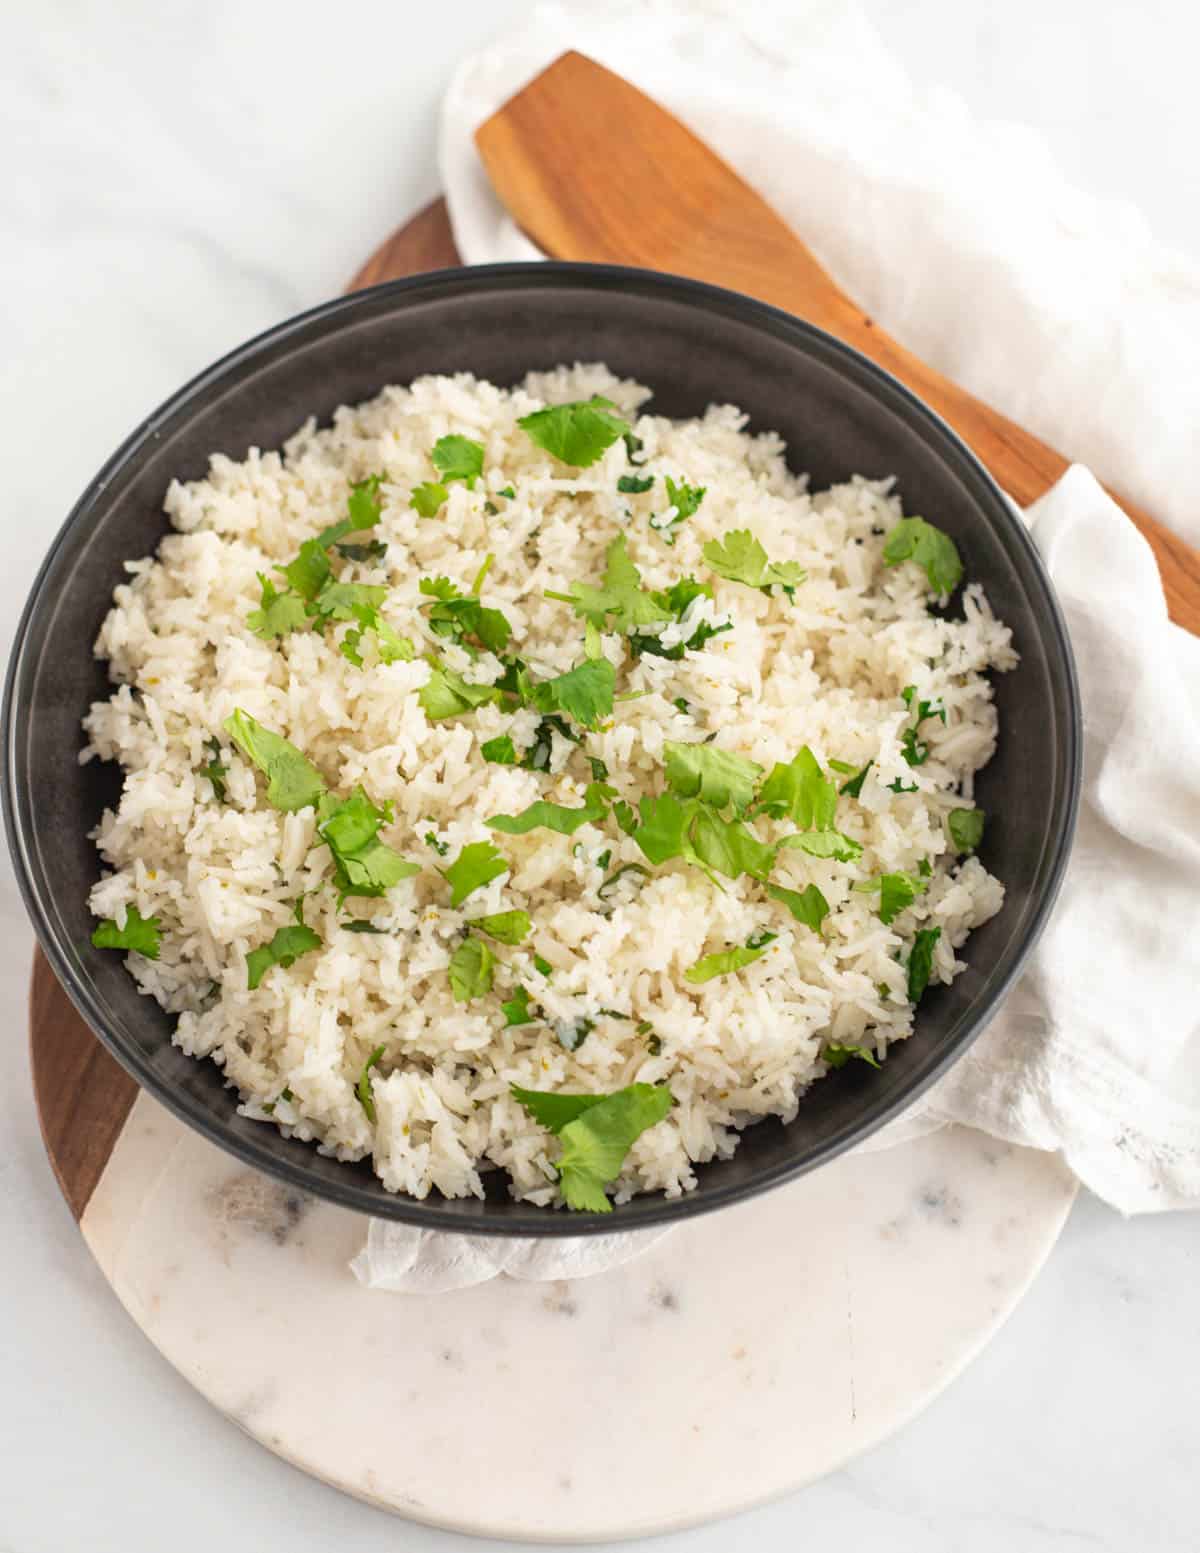 Cilantro lime rice in black serving bowl.
